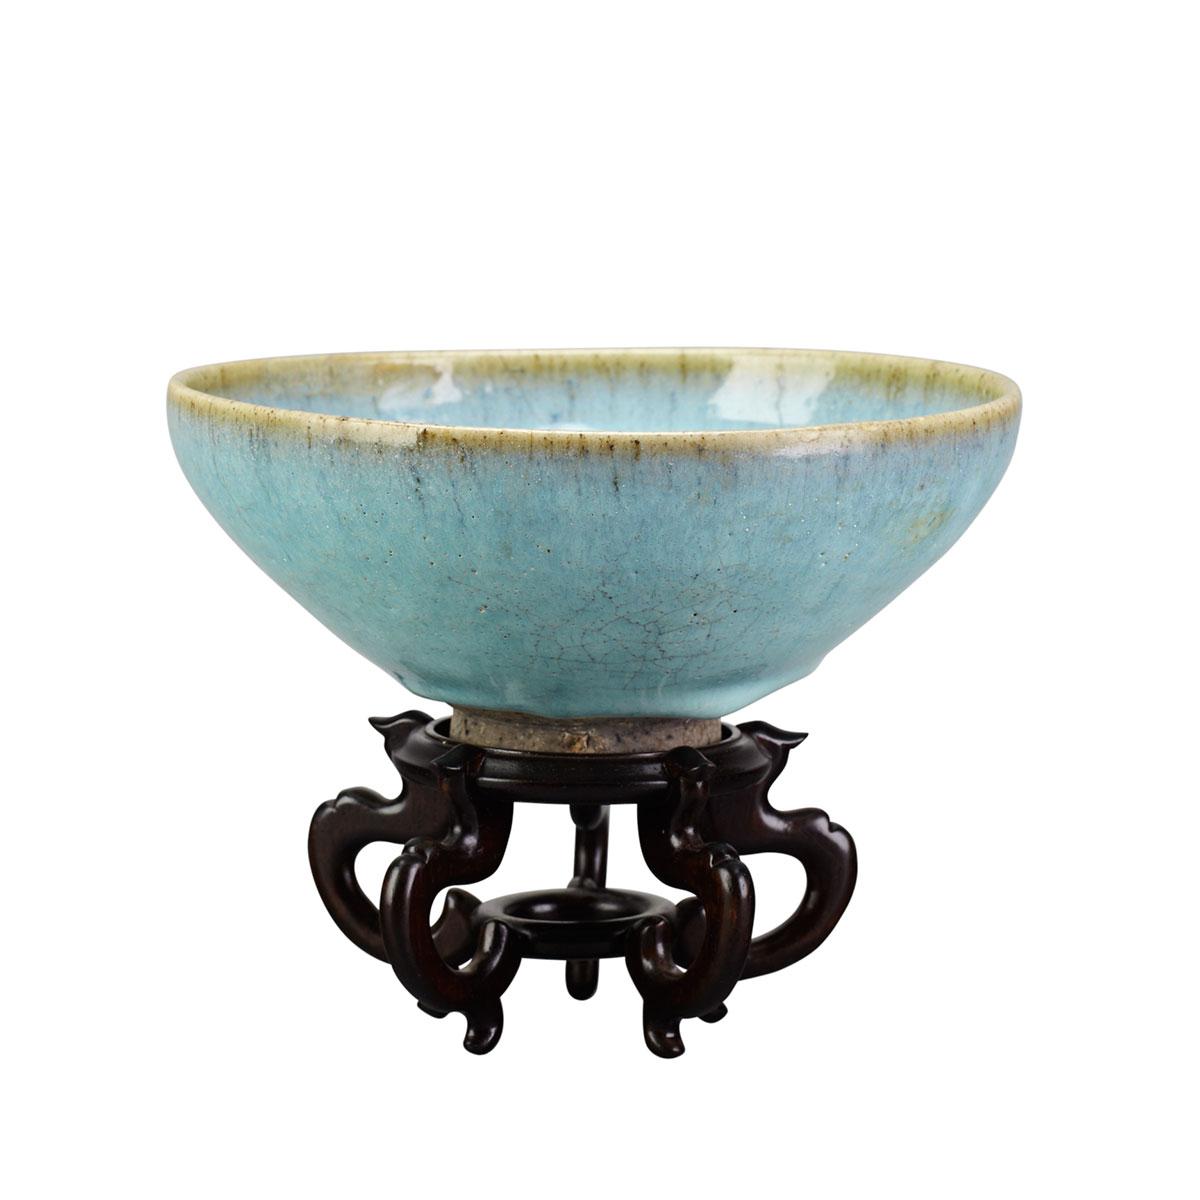 Jun Yao Glazed Bowl, Qing Dynasty or Earlier